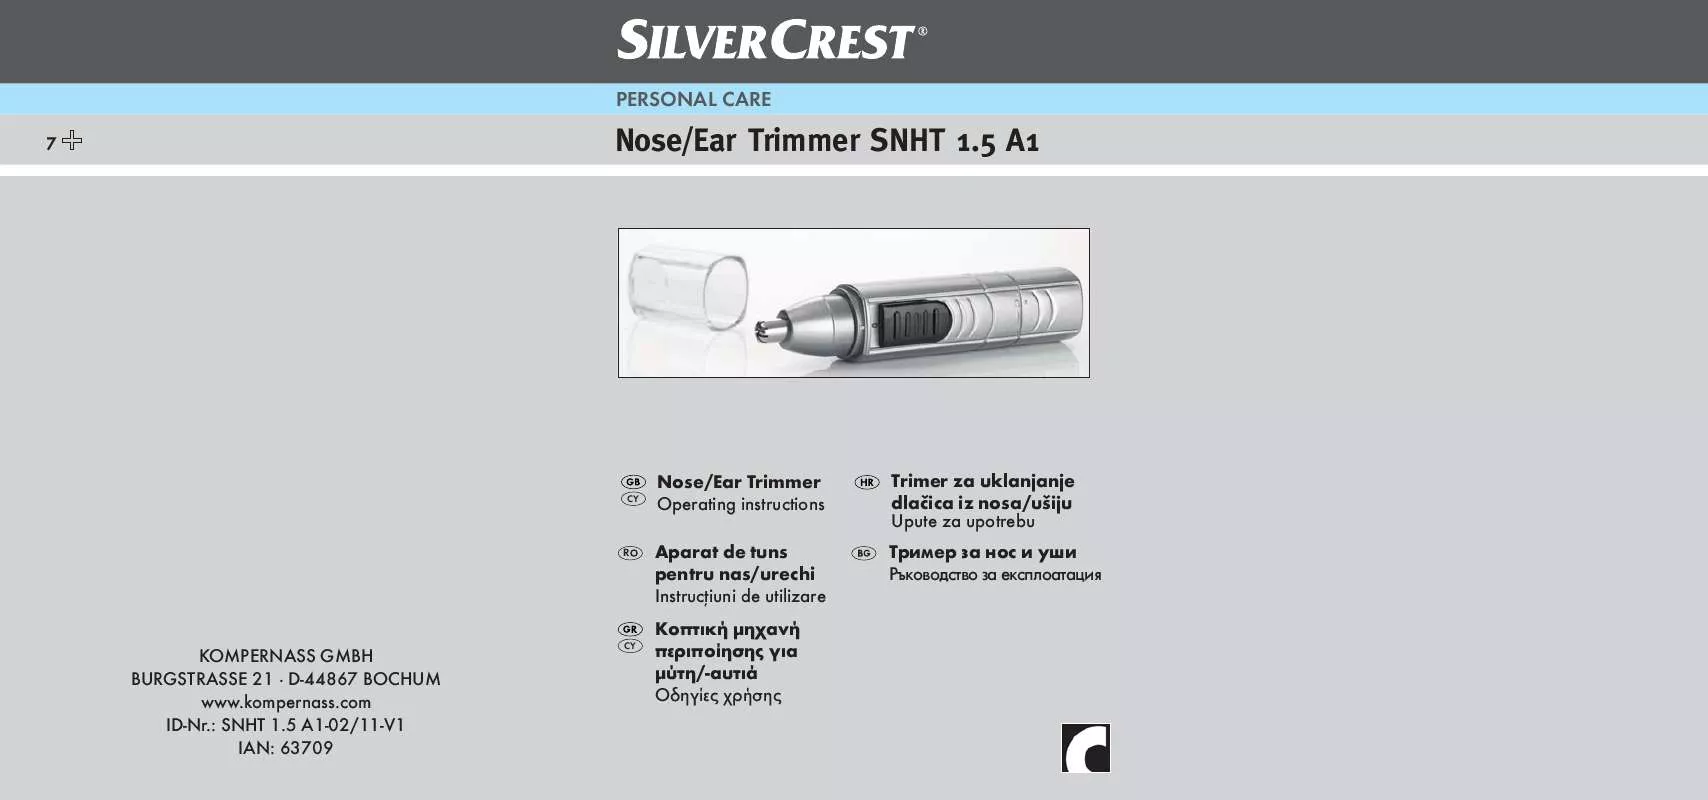 Mode d'emploi SILVERCREST SNHT 1.5 A1 NOSE-EAR TRIMMER